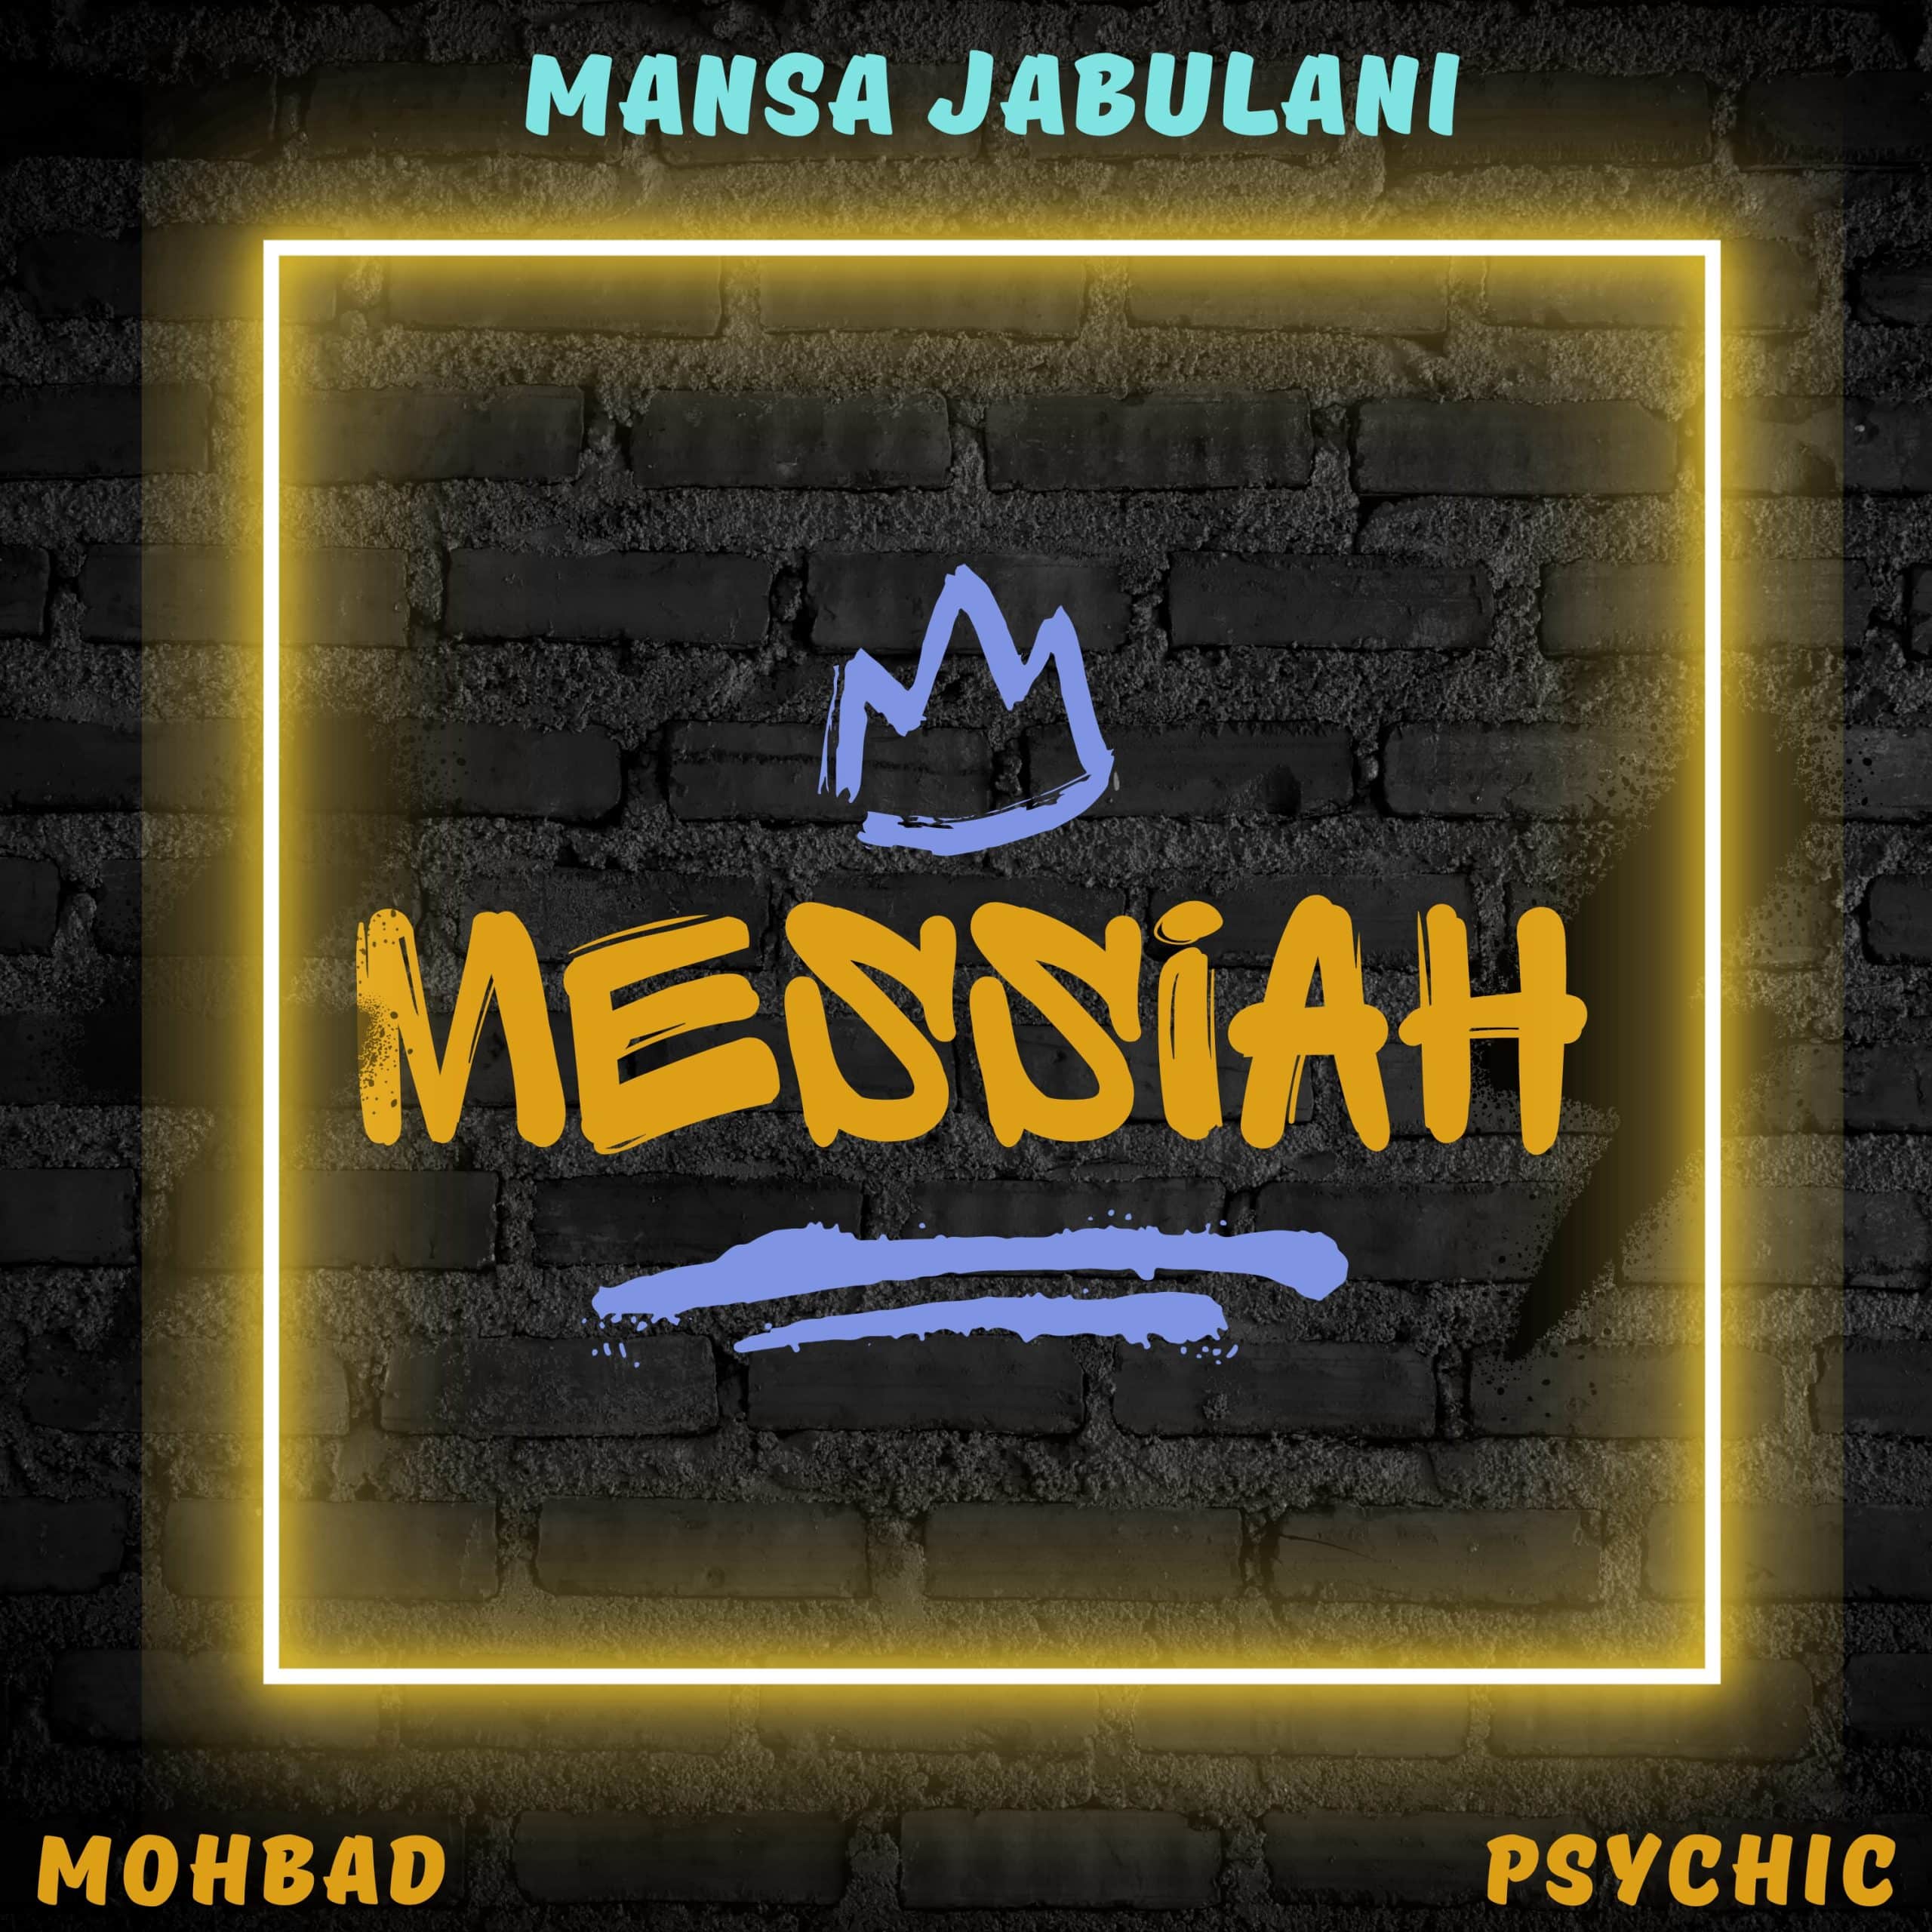 [MUSIC] MANSA JABULANI FT MOHBAD x PSYCHIC – MESSIAH